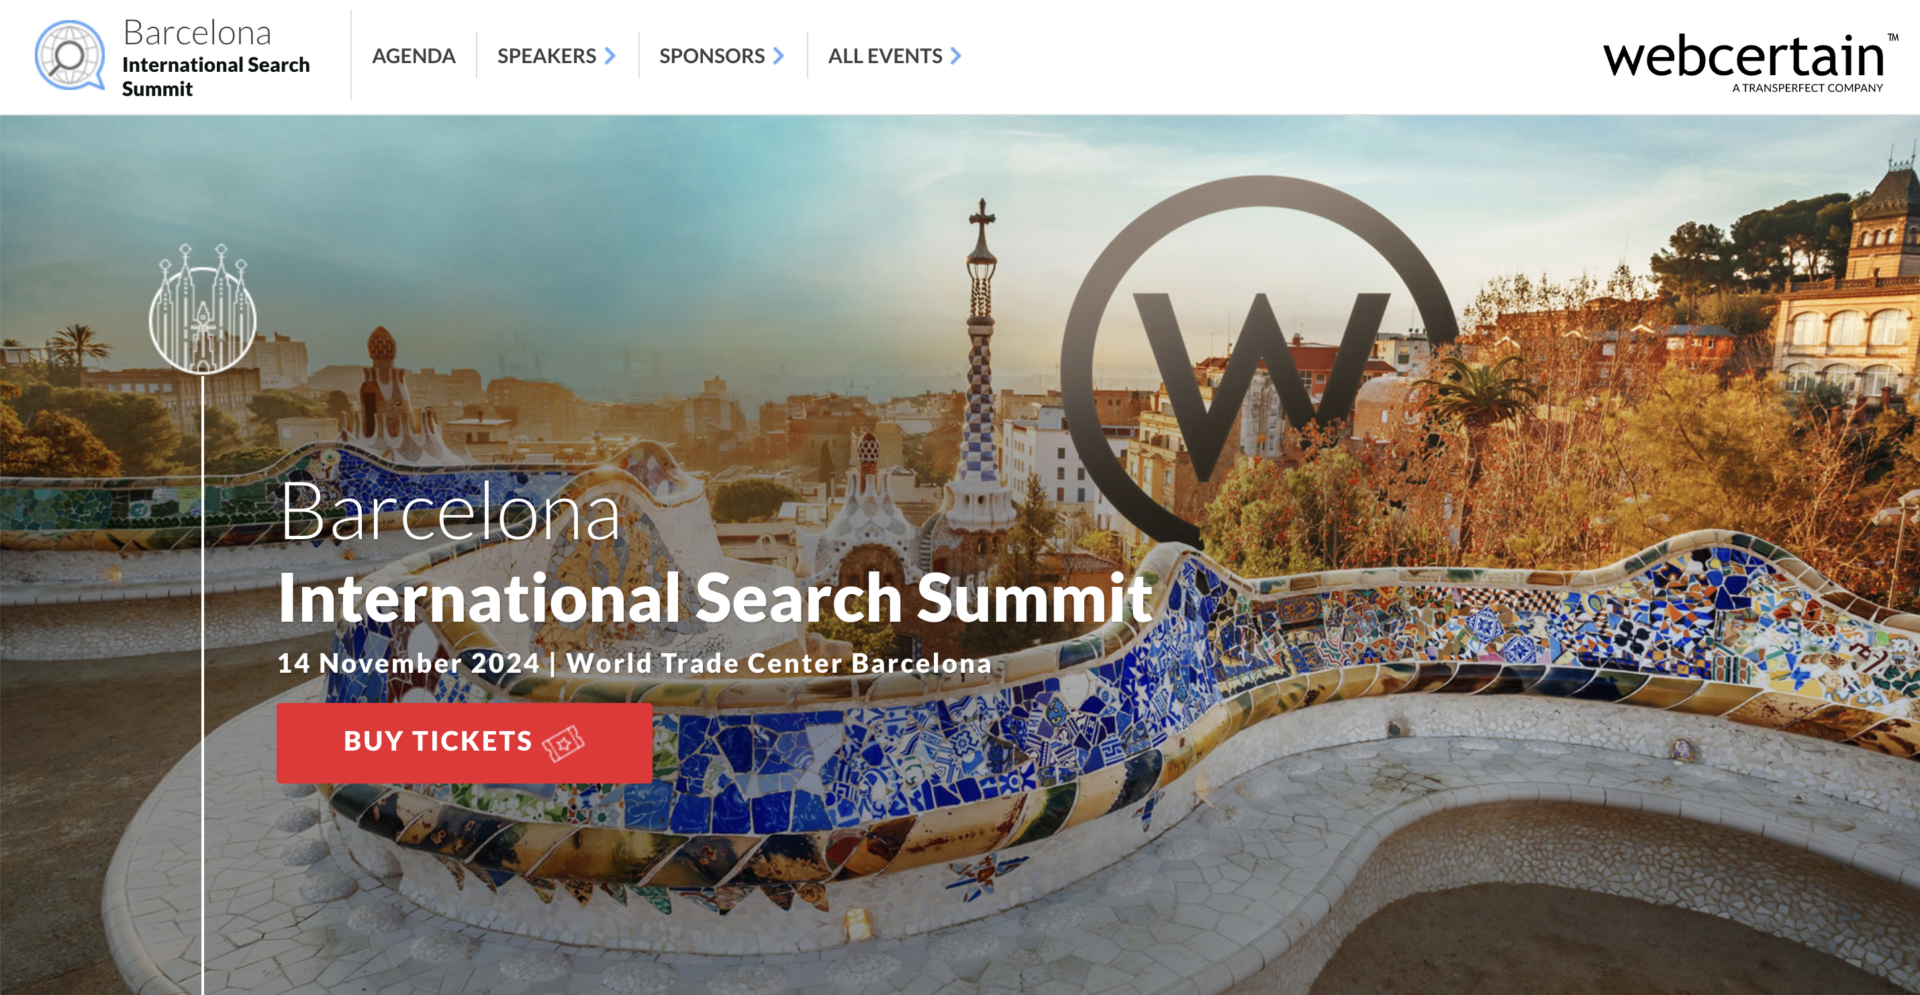 The International Search Summit